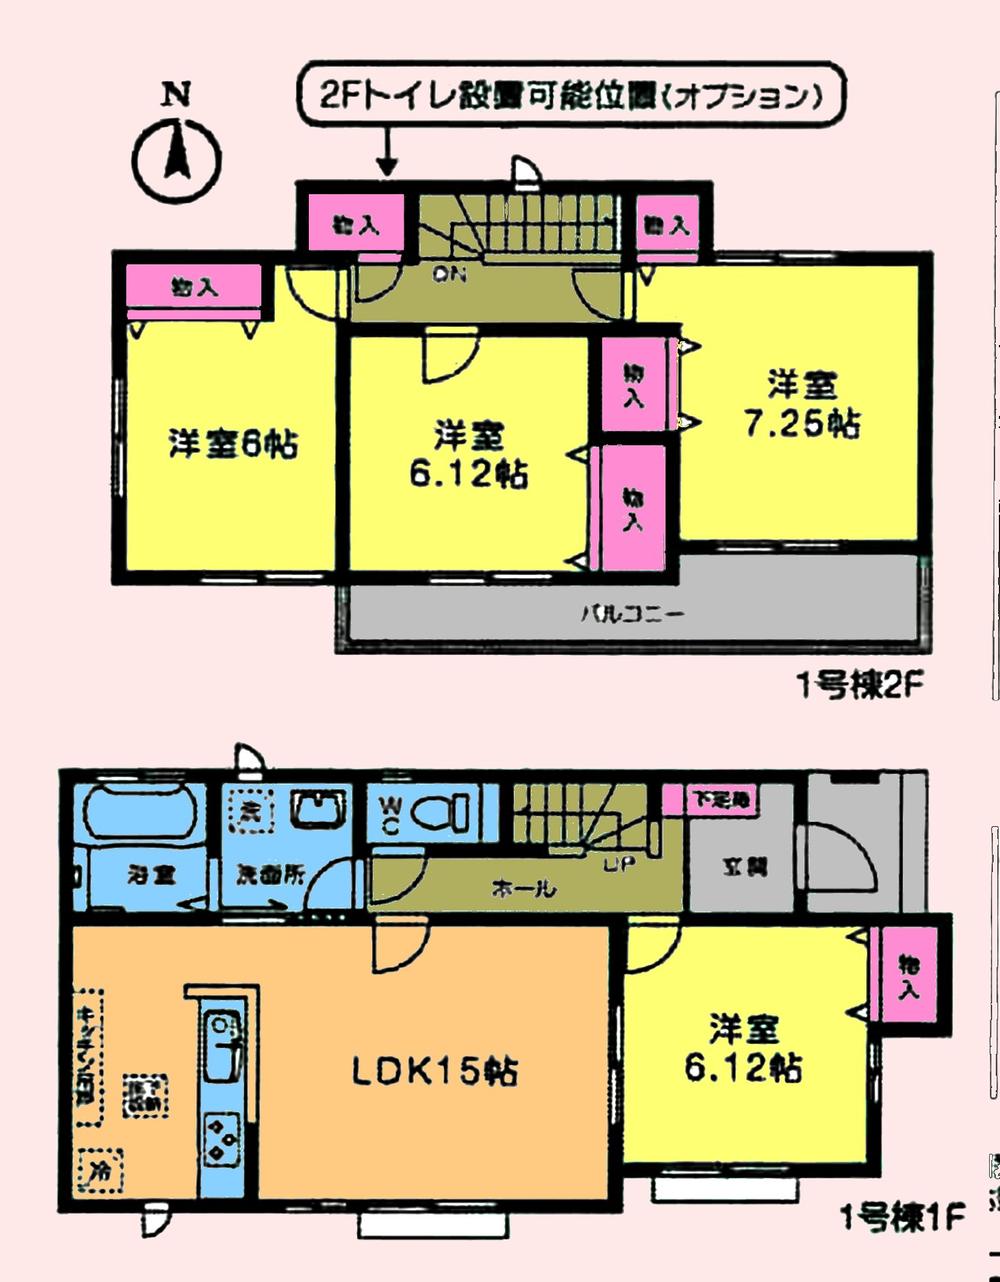 Floor plan. (1 Building), Price 20.8 million yen, 4LDK, Land area 147.94 sq m , Building area 96.88 sq m